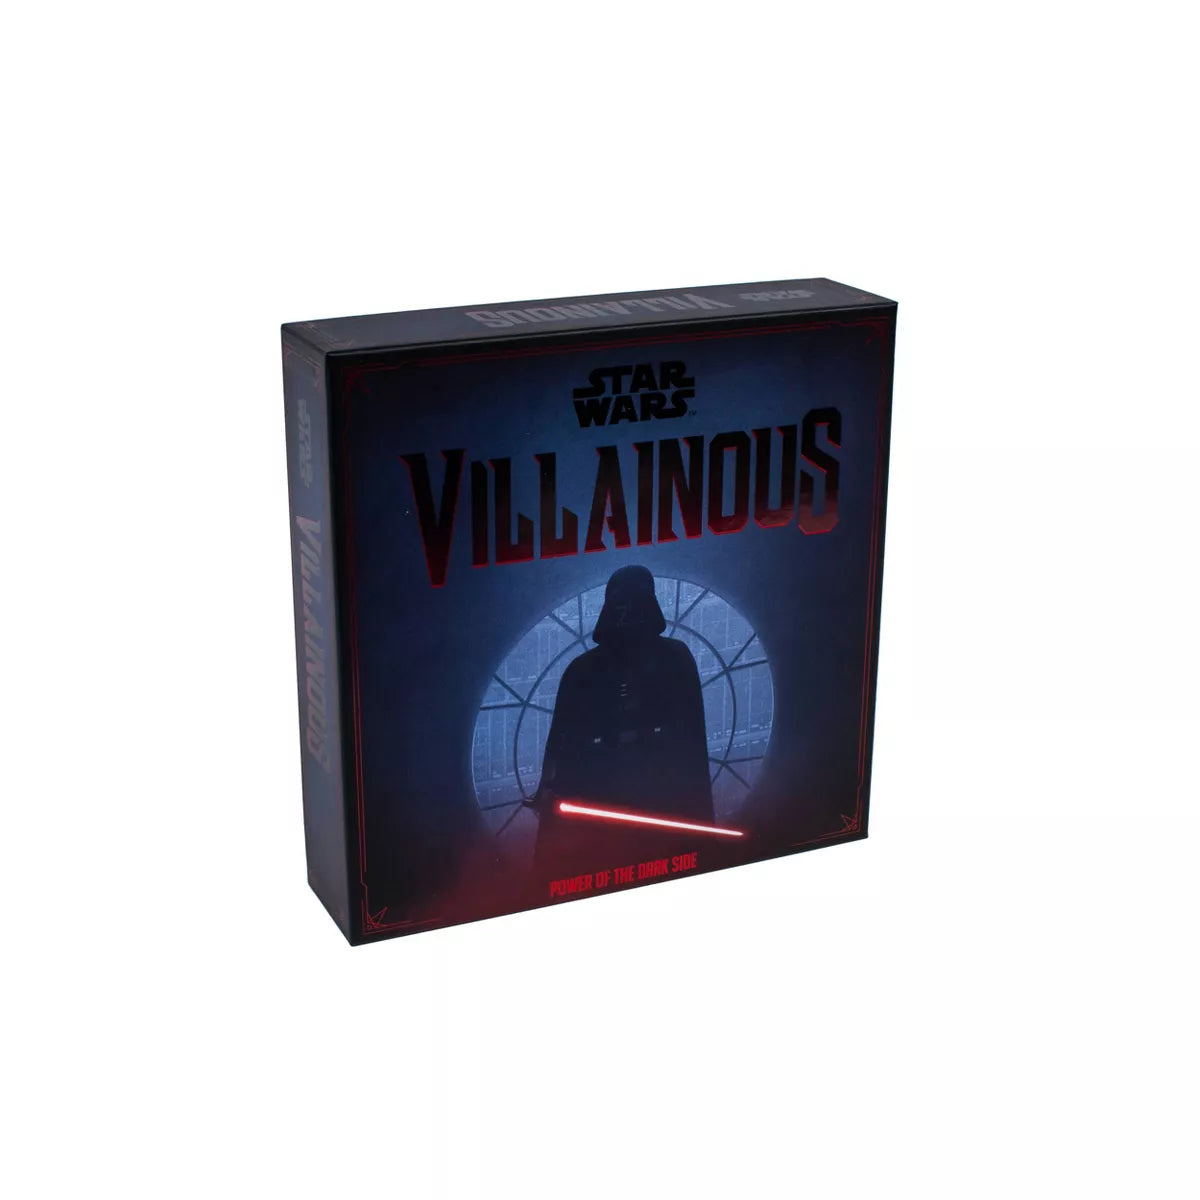 Star Wars Villainous: Power of the Dark Side | Grognard Games